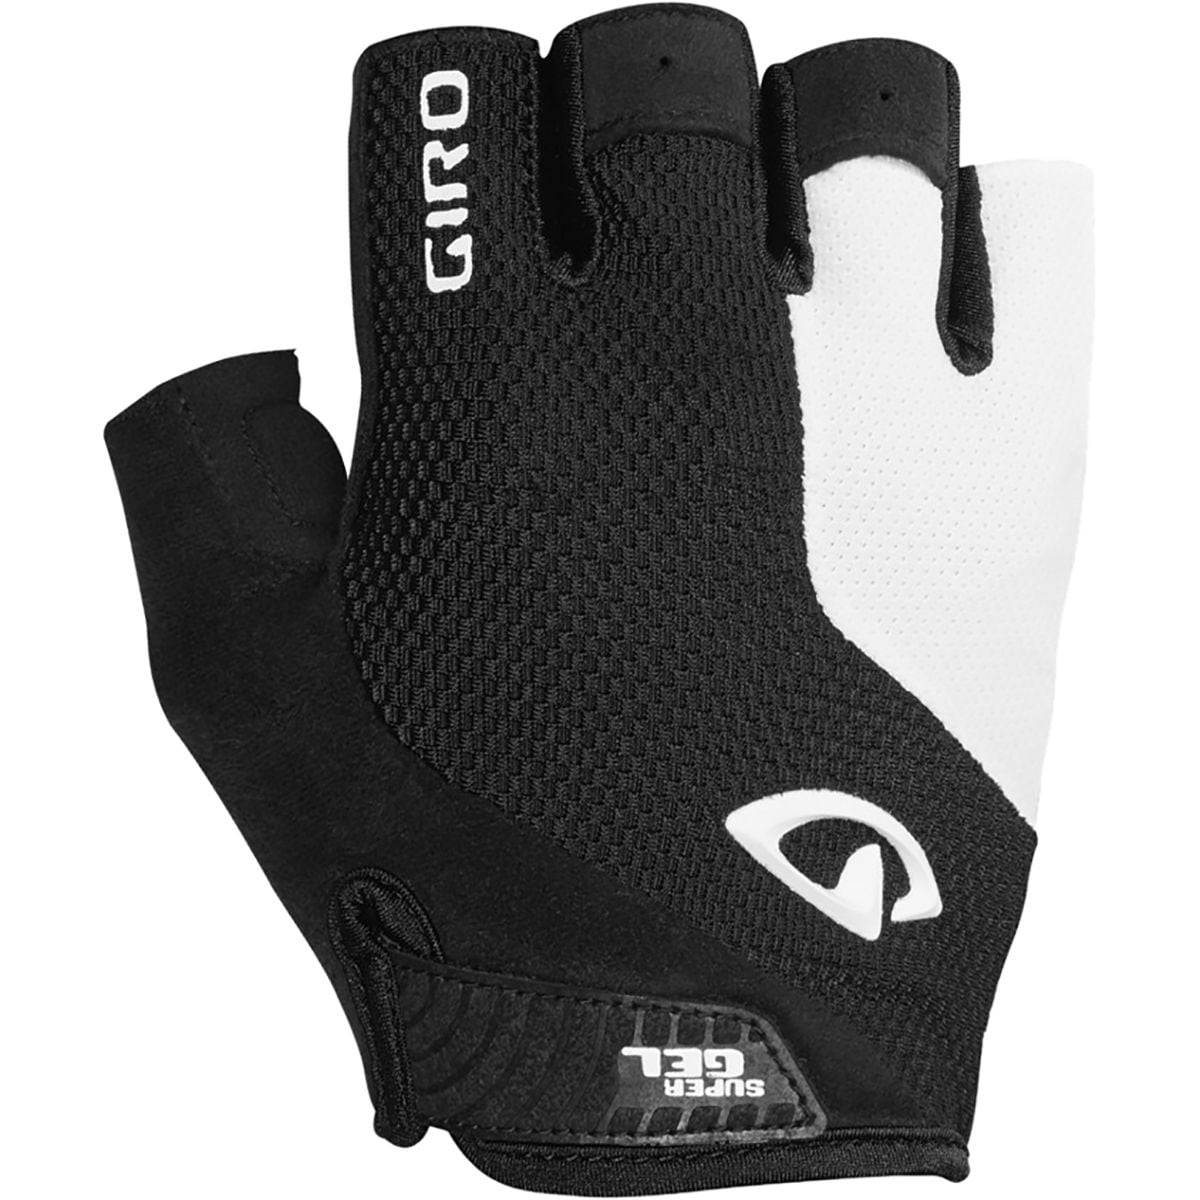 Giro Strate Dure Supergel Gloves Men's